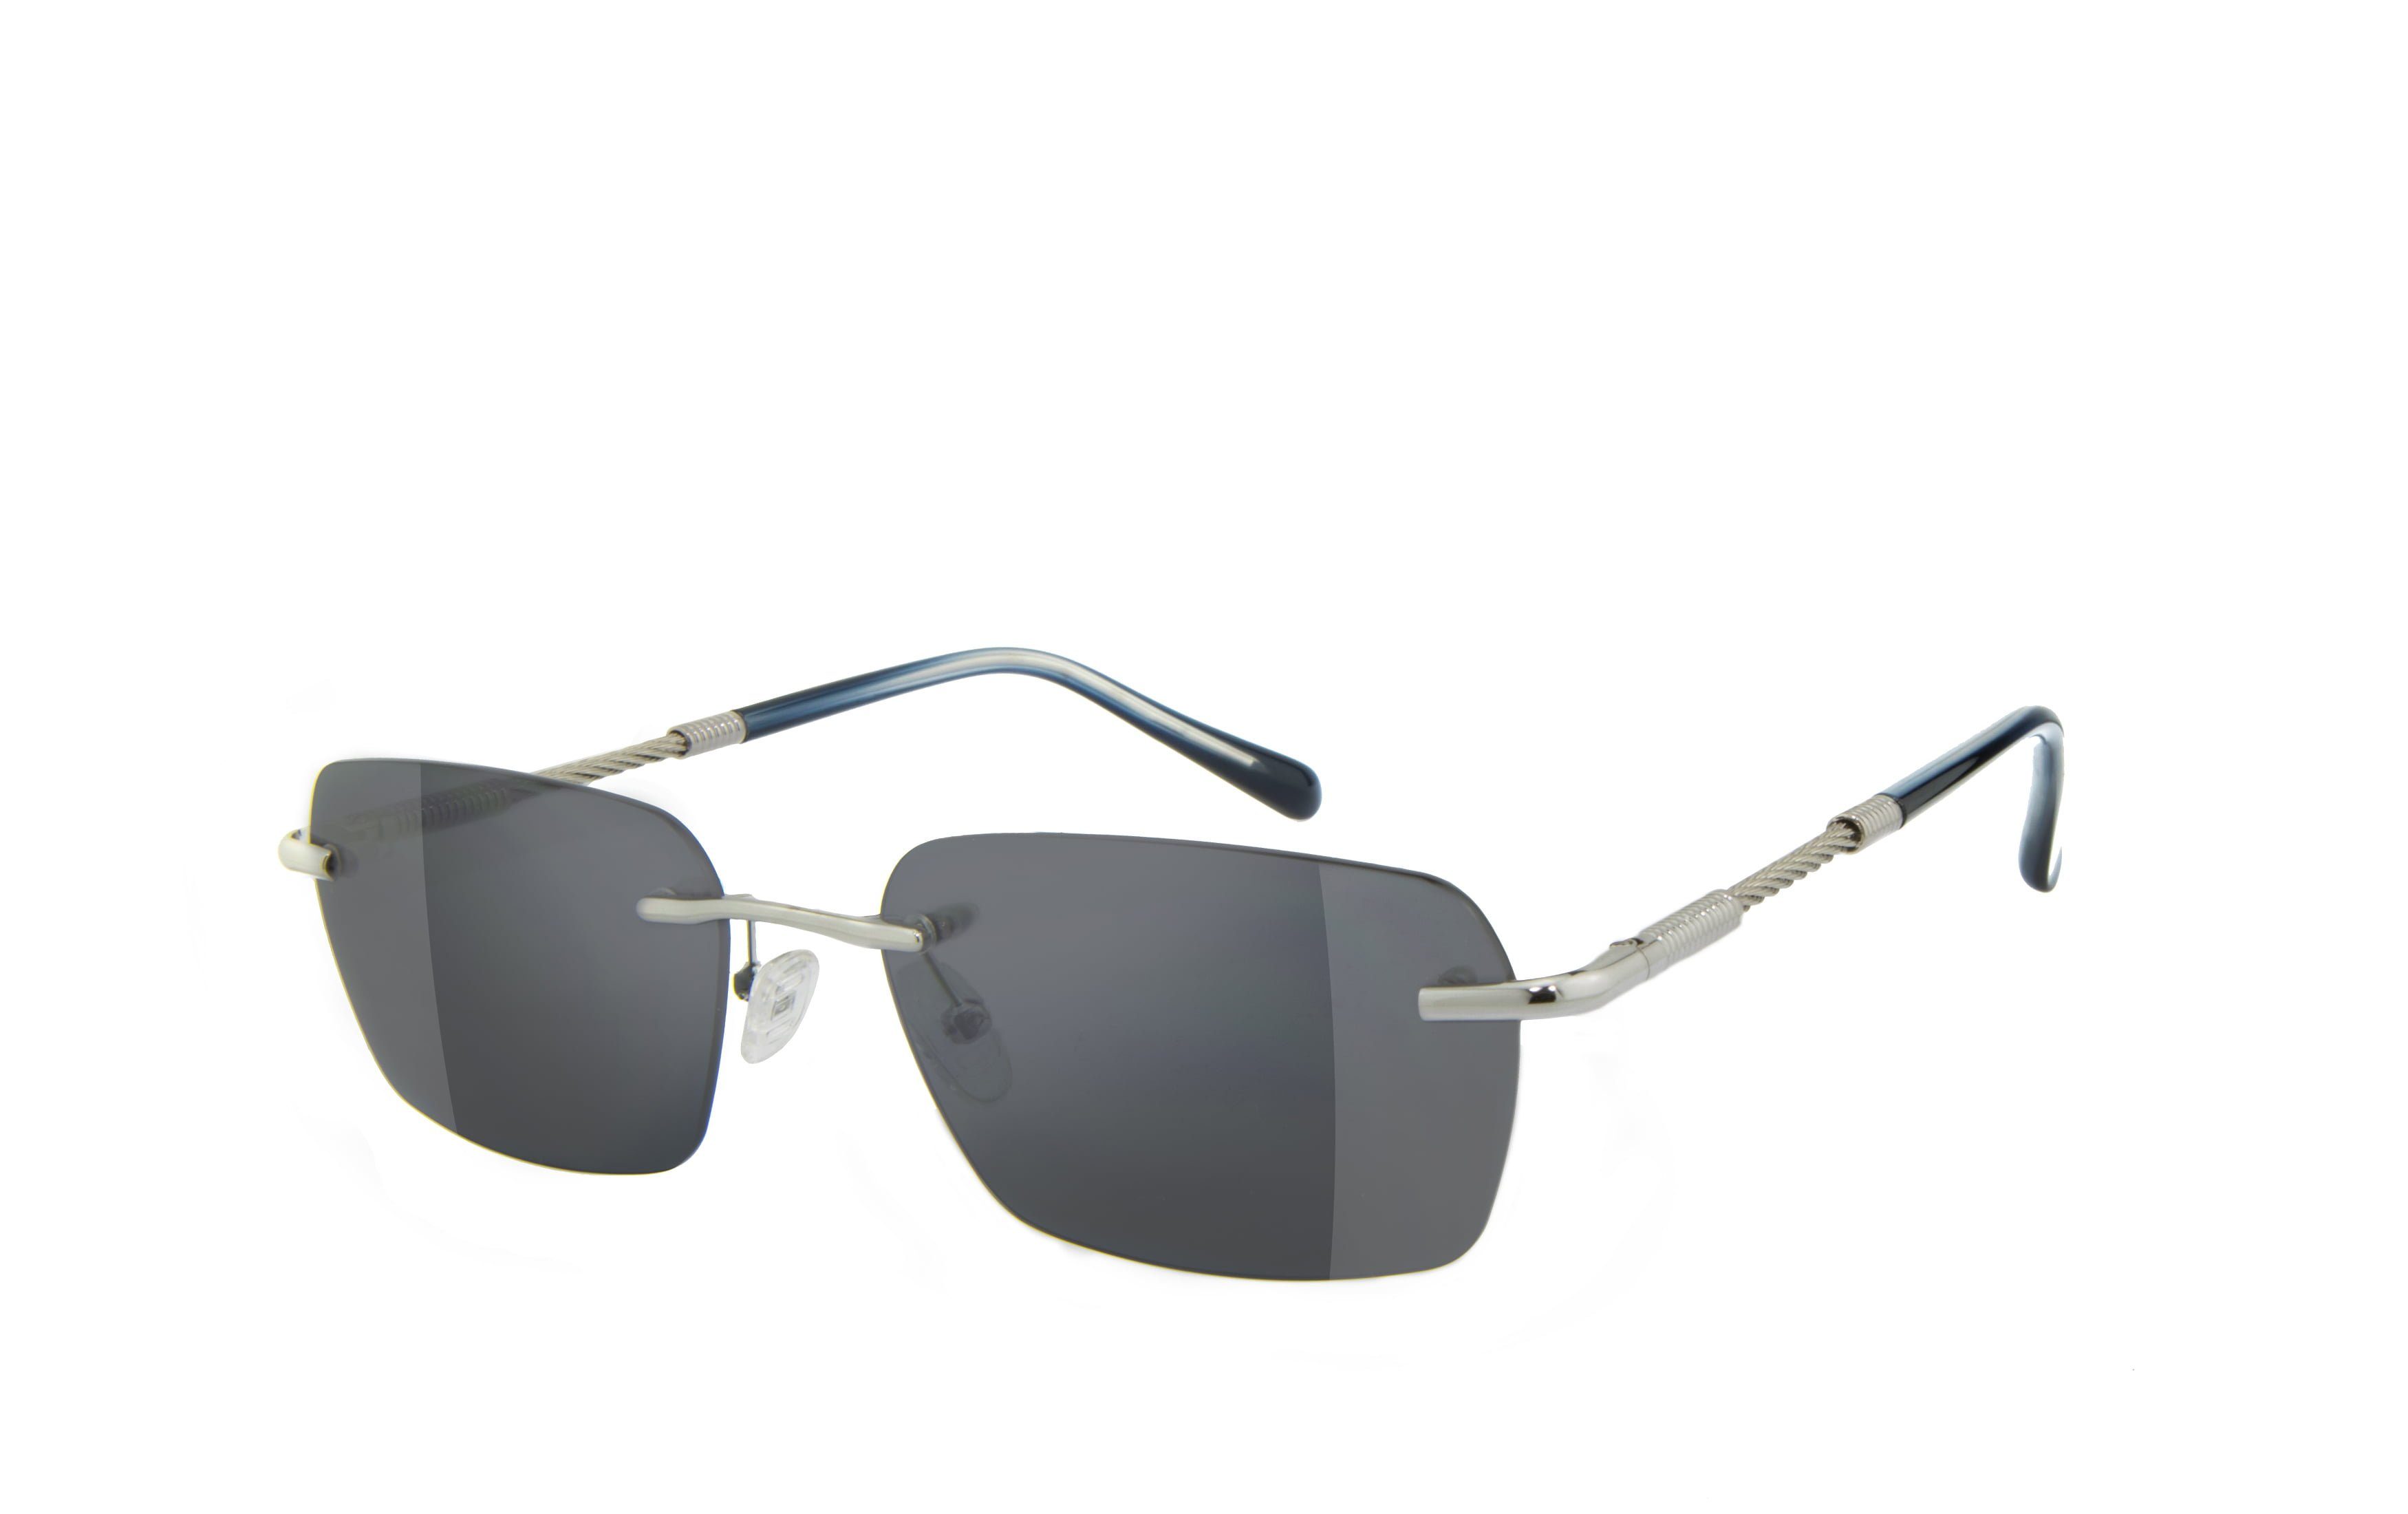 Sonnenbrille EYEWEAR BTE006s-a HLT® Flex-Scharniere BERTONI Qualitätsgläser,